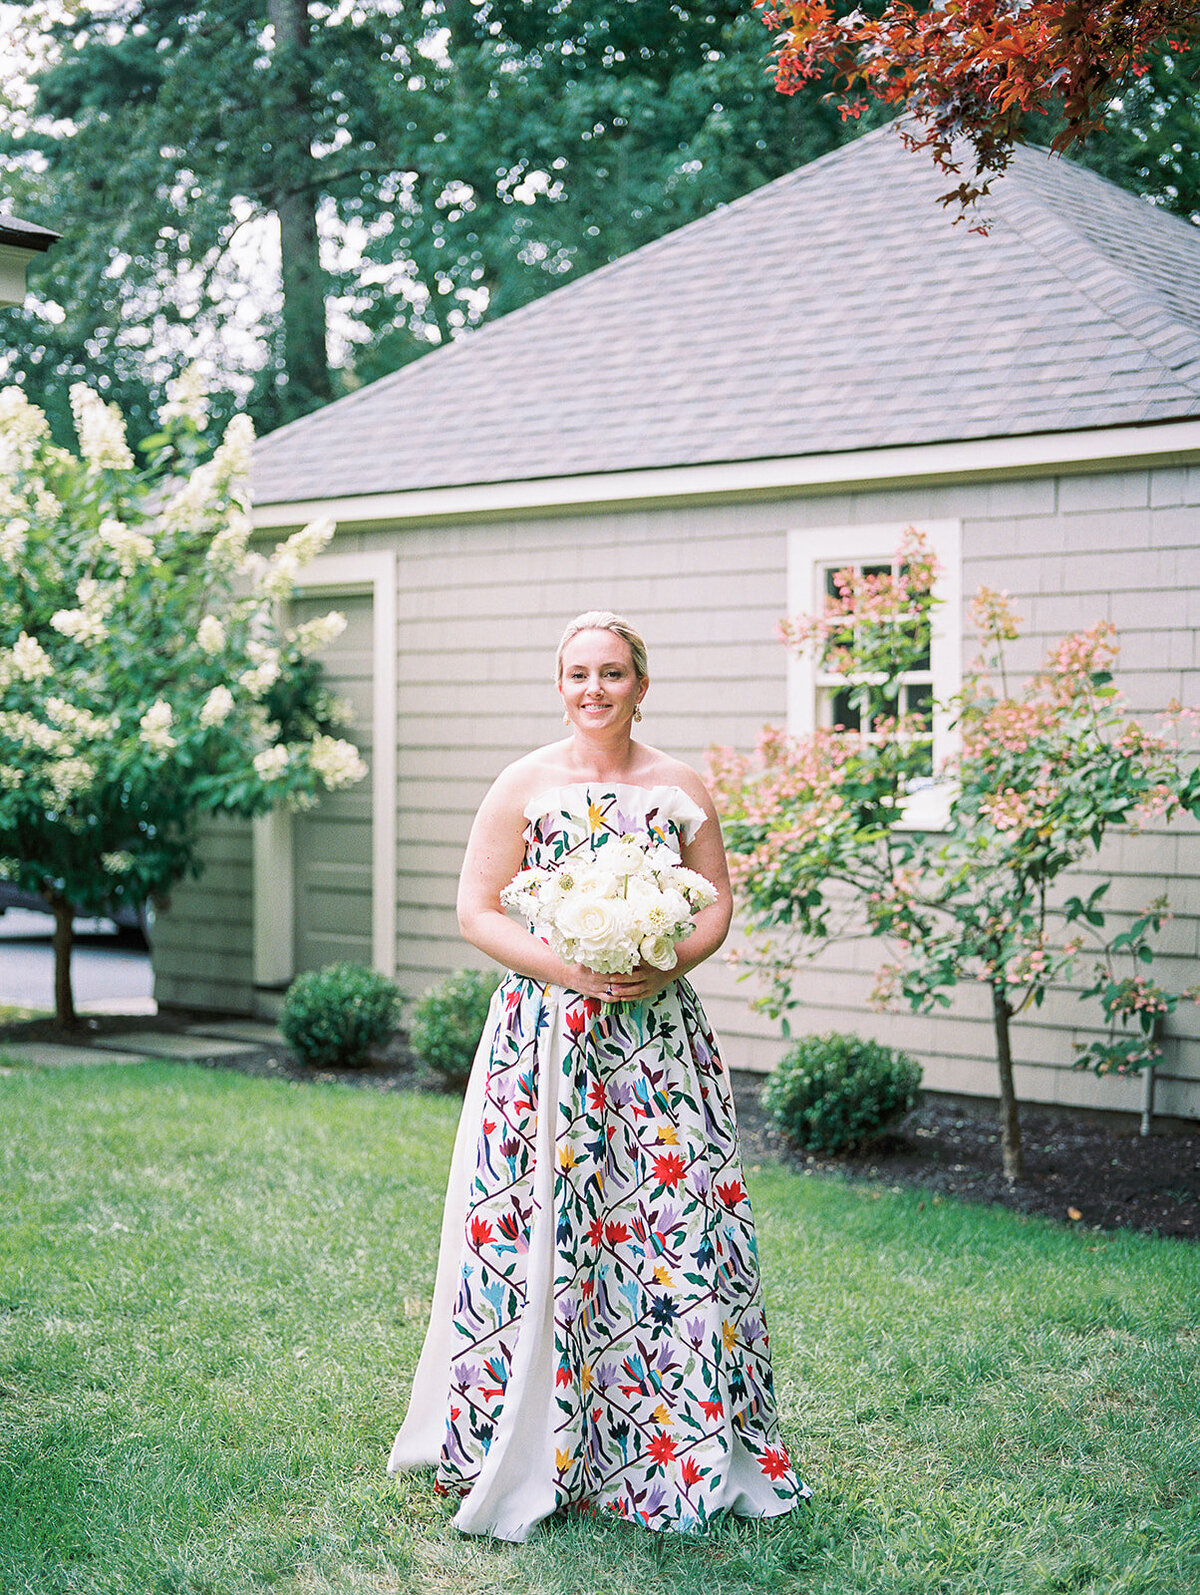 Kate-Murtaugh-Events-Boston-wedding-planner-elopement-microwedding-white-bouquet-bride-Carolina-Herrera-colorful-dress